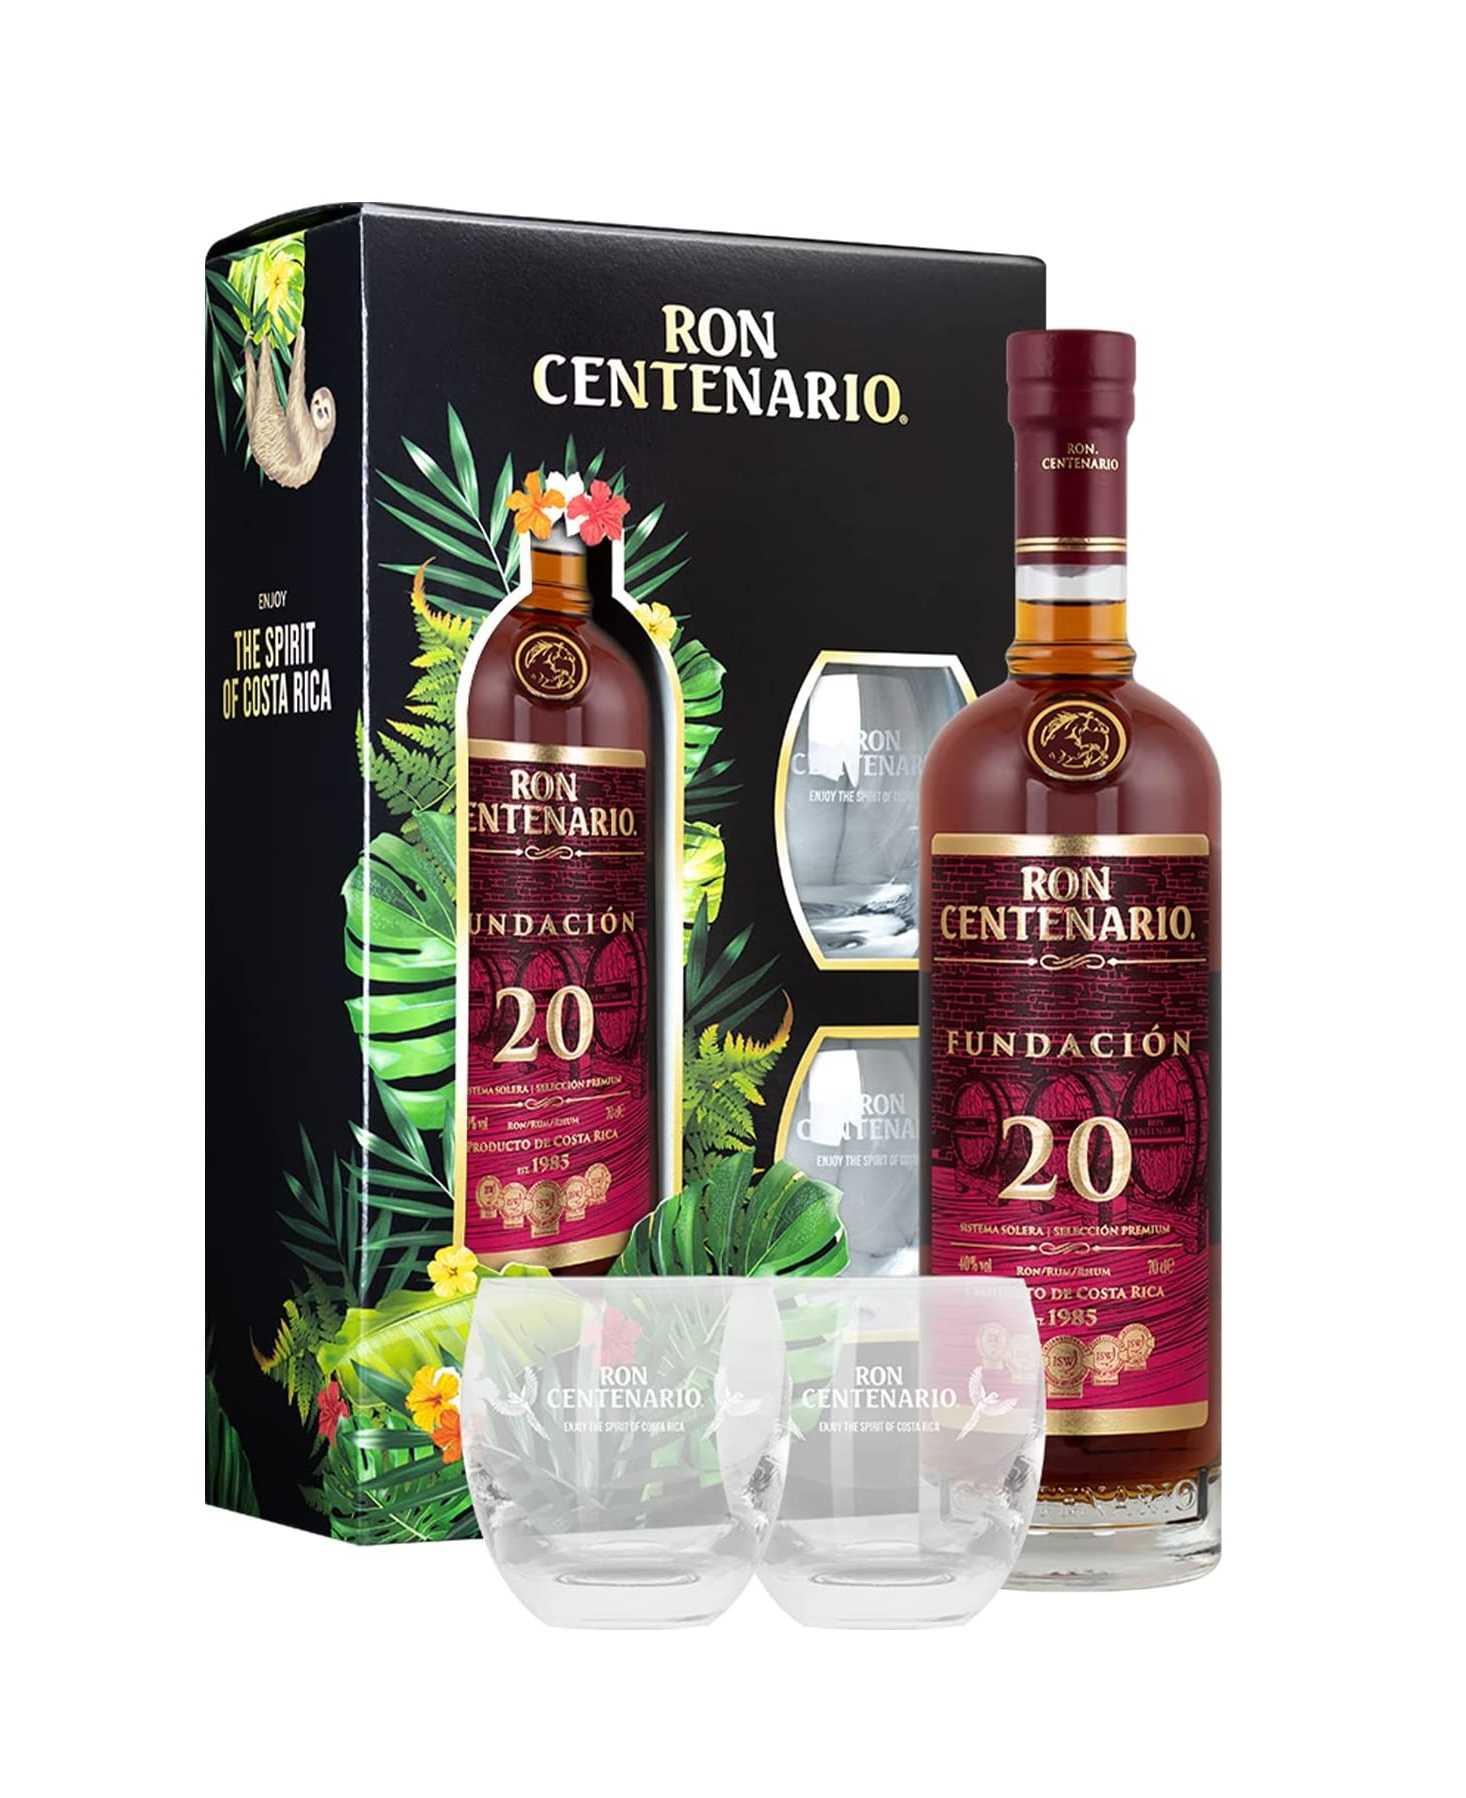 Tumbler, + 39,99€ 47,39€) Rum BevBox: 40% (statt Vol Ron Centenario Jahre 2 für Fundación 20